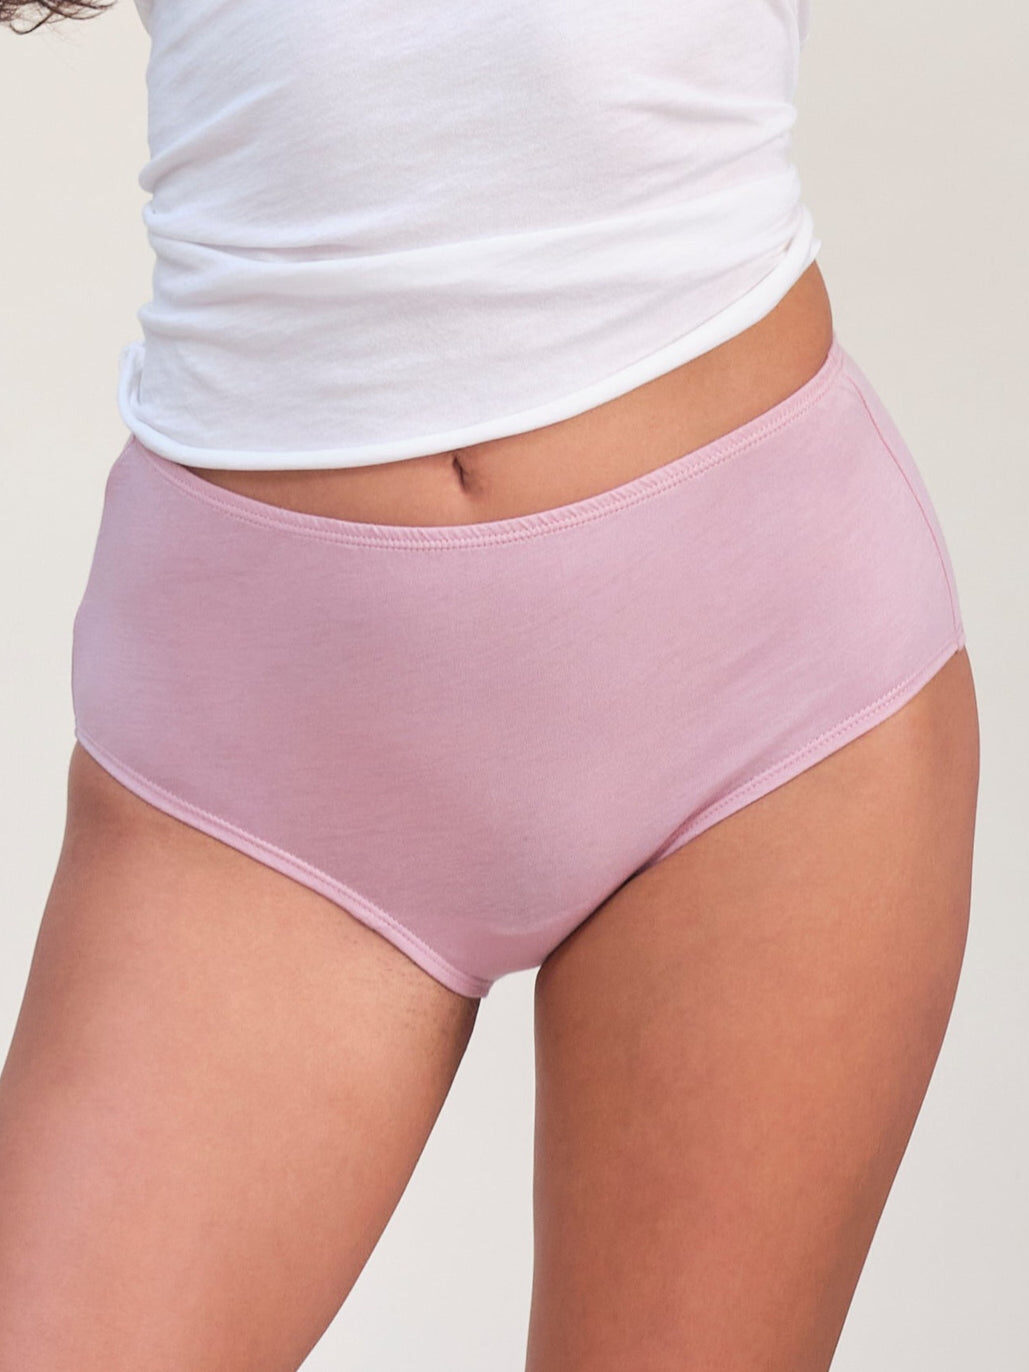 Close up studio shot of a model wearing Oddobody high waist underwear in pink.